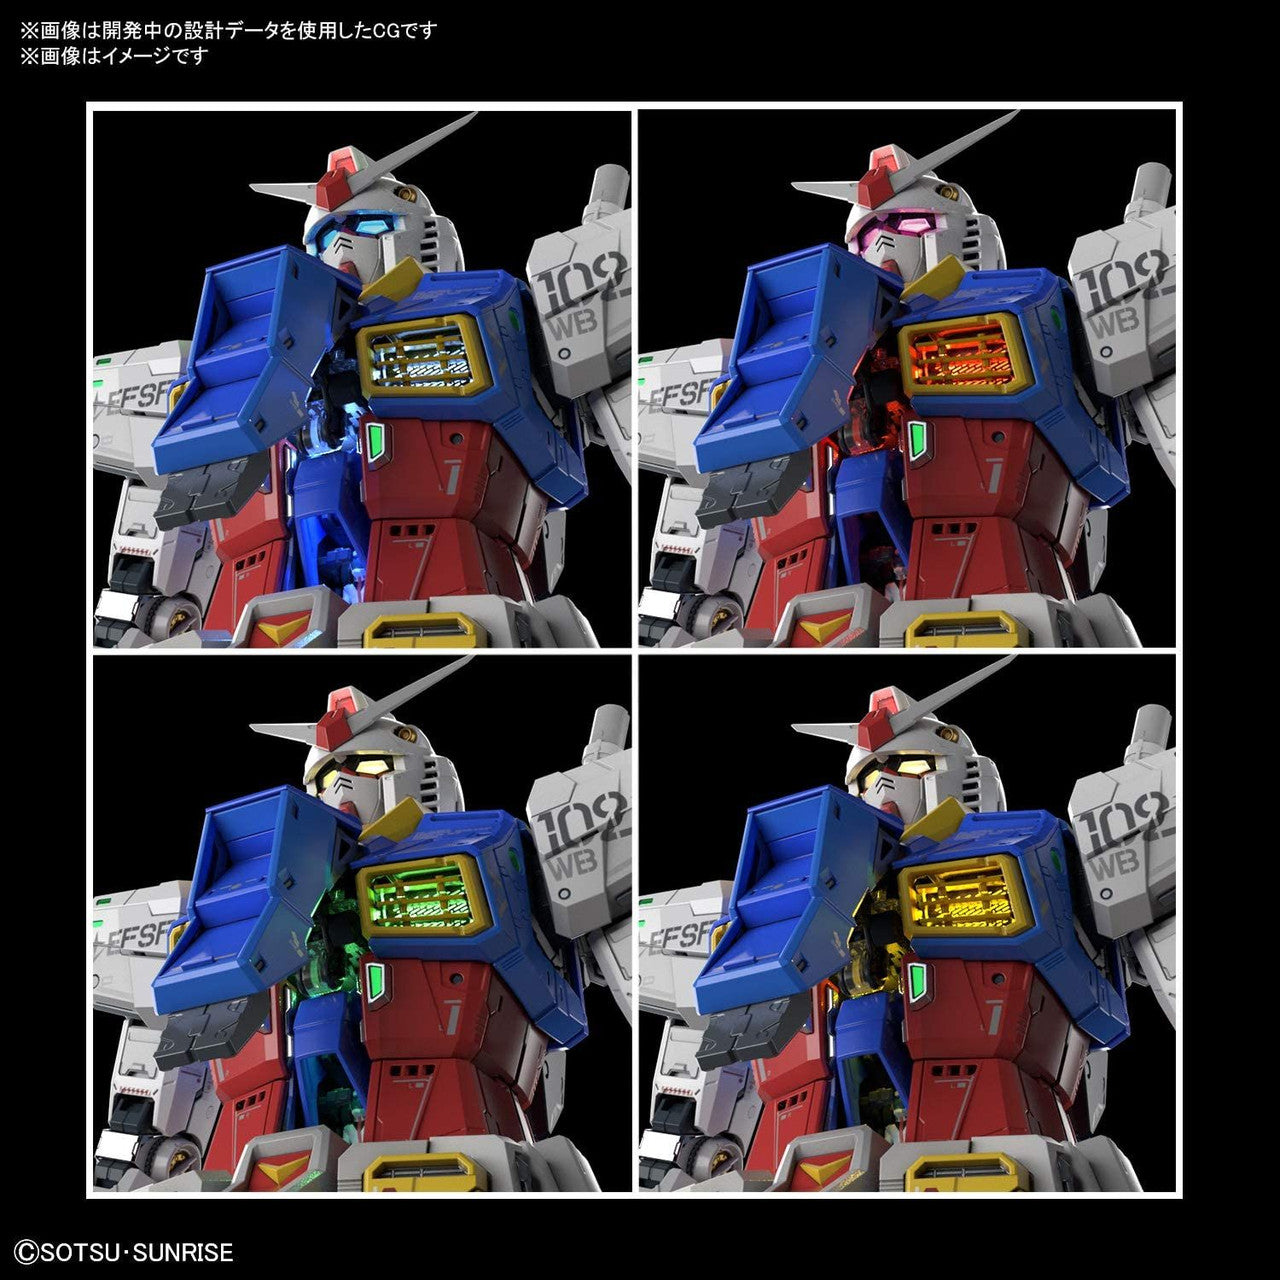 Bandai Perfect Grade Unleashed RX-78-2 Gundam E.F.S.F. Prototype 